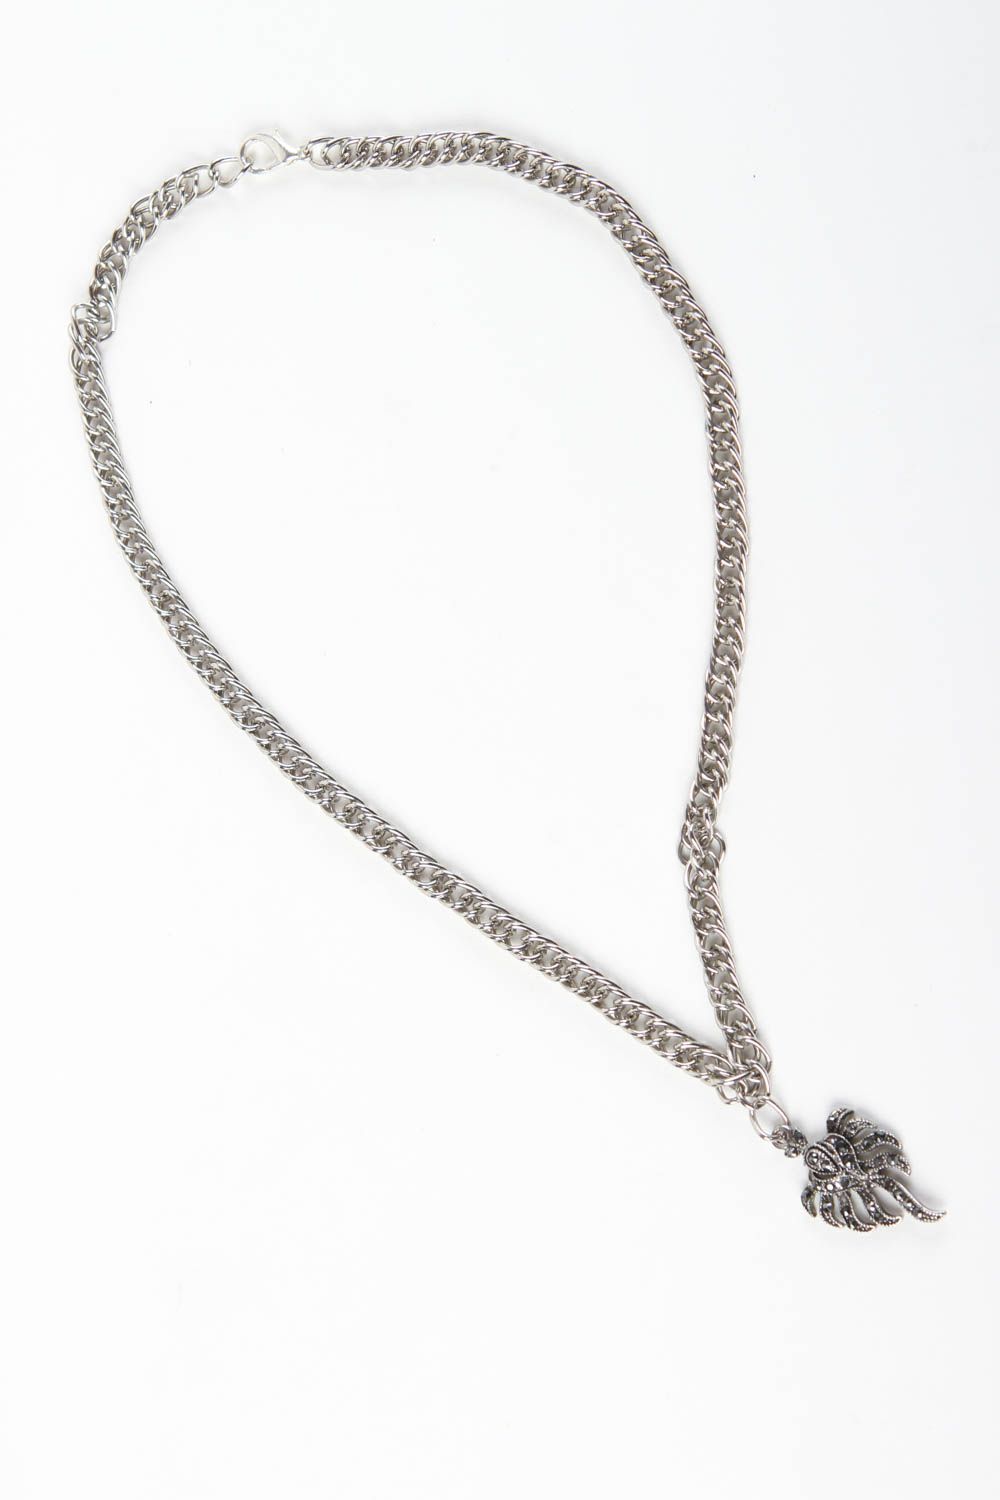 Unusual handmade metal pendant metal necklace designs accessories for girls photo 2